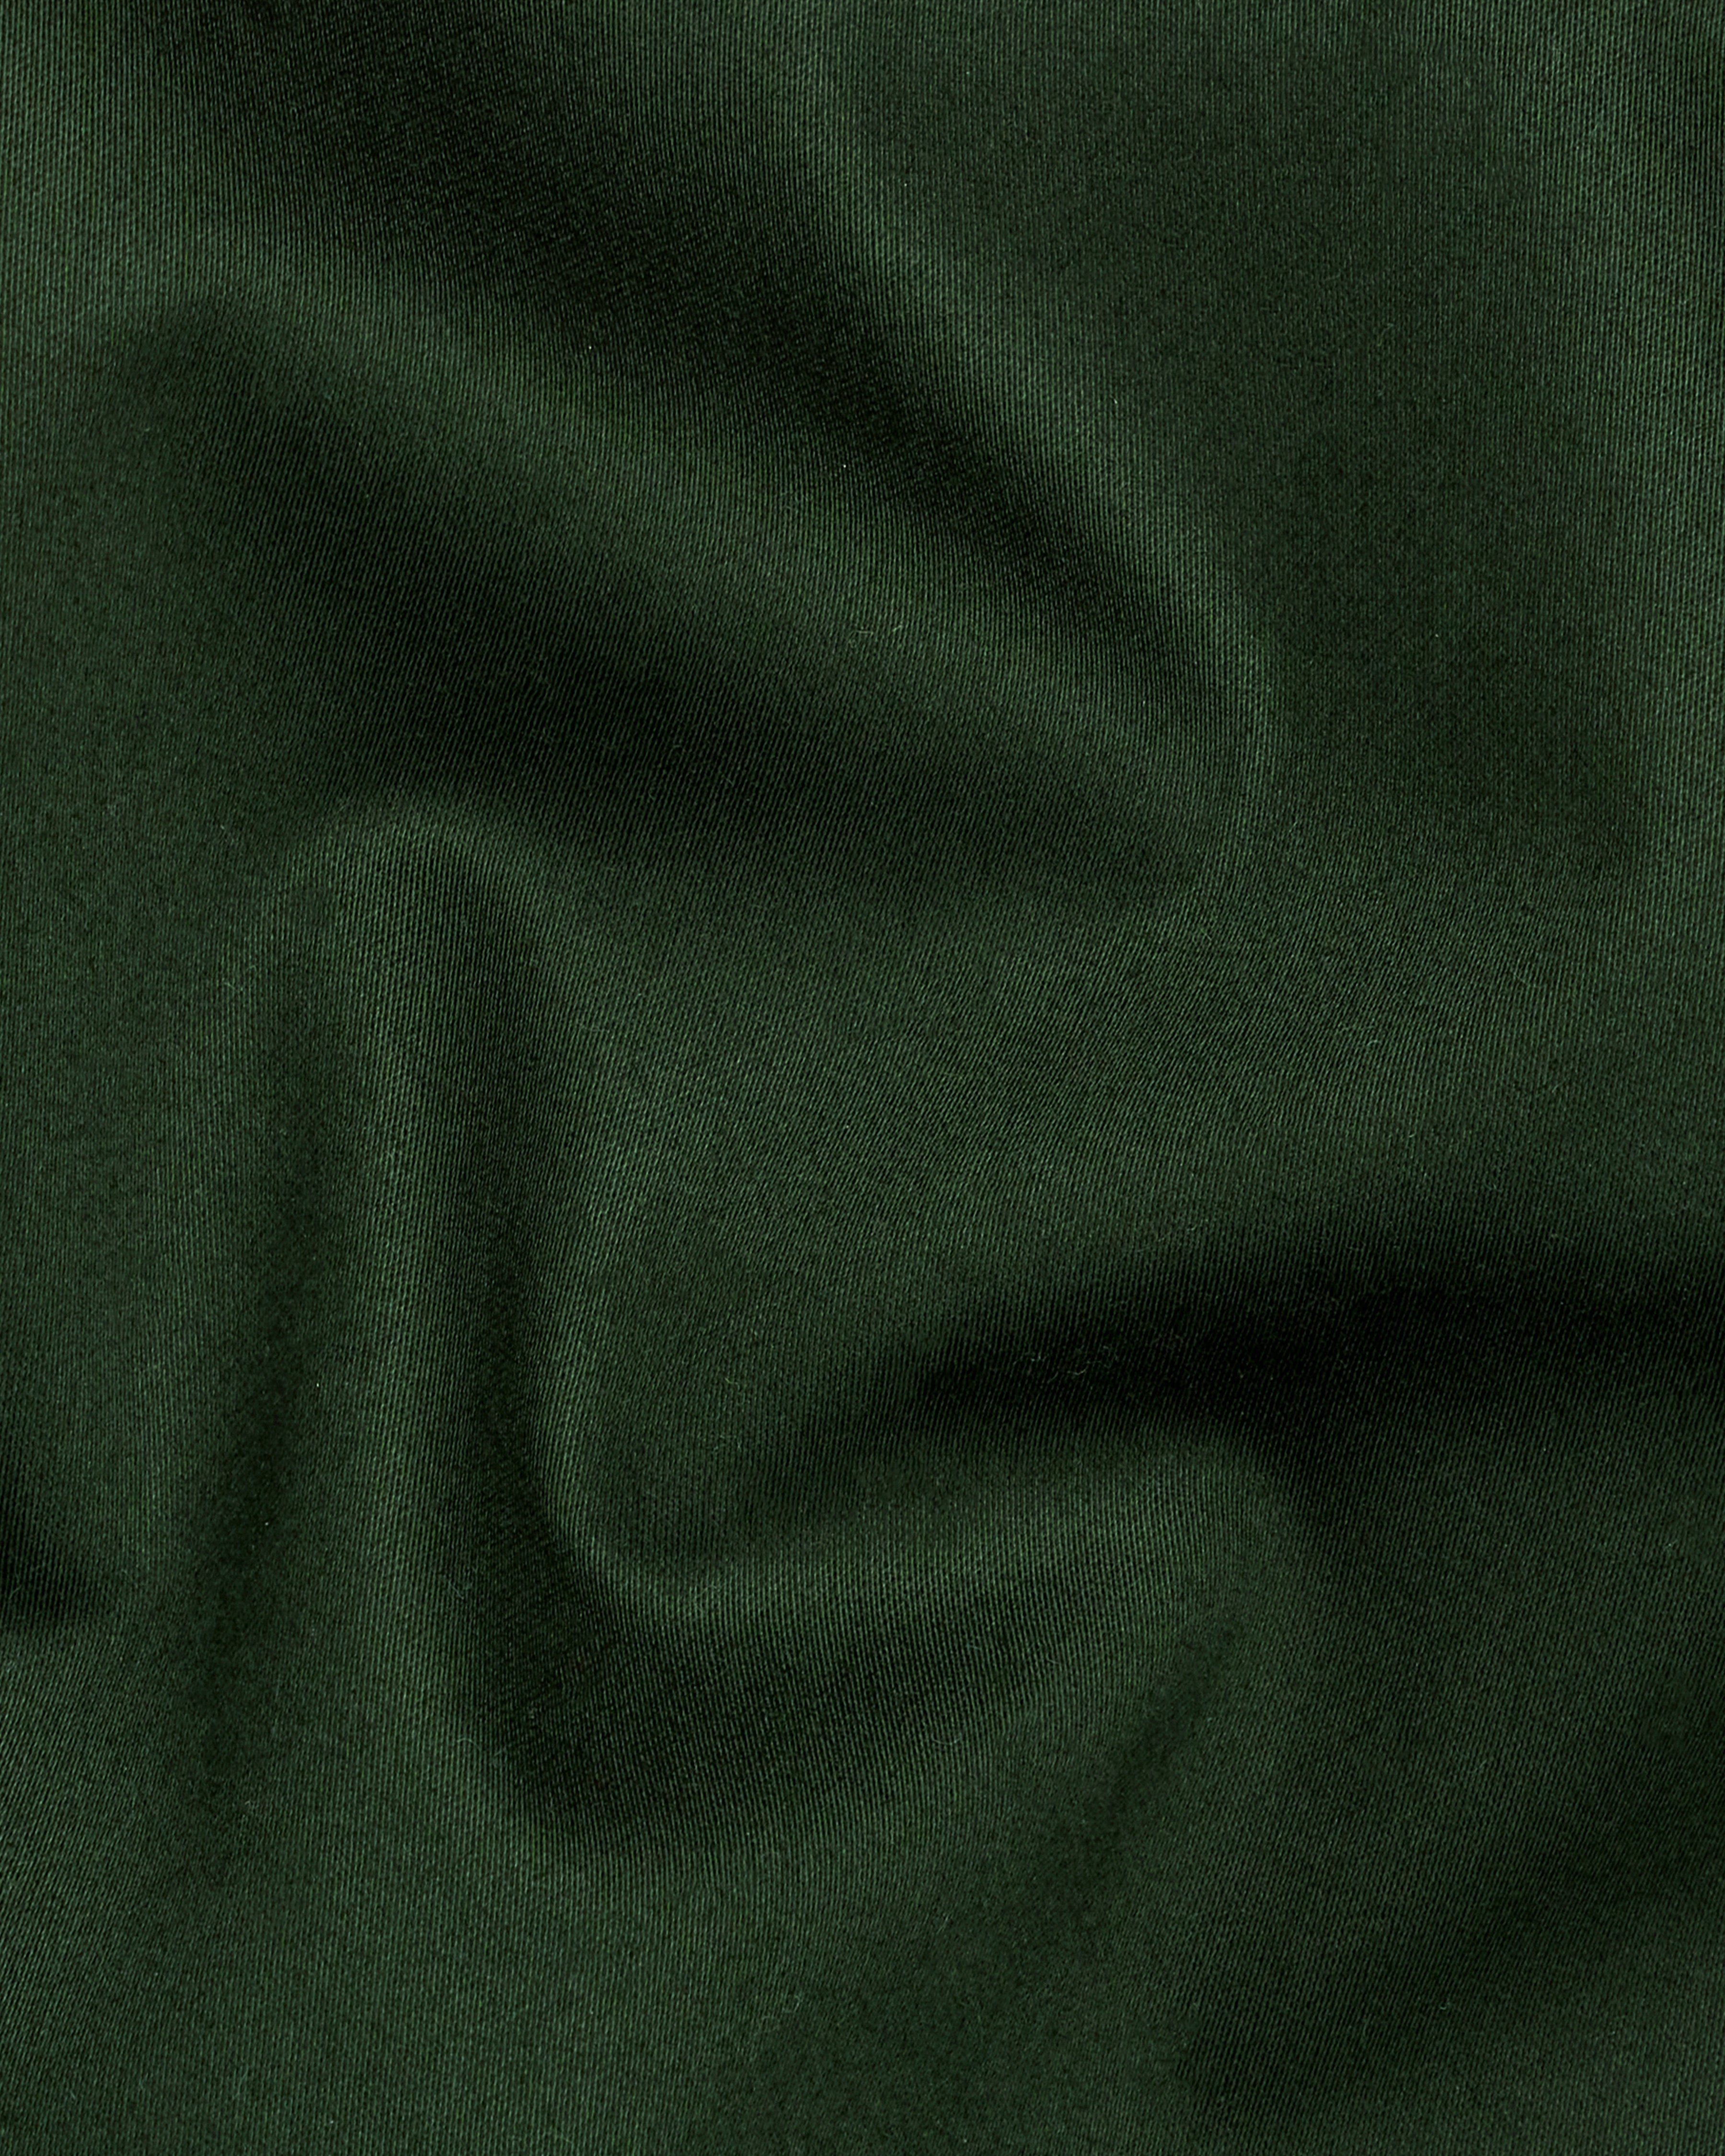 Myrtle Green Wool Rich Stretchable traveler Pant T2704-28, T2704-30, T2704-32, T2704-34, T2704-36, T2704-38, T2704-40, T2704-42, T2704-44